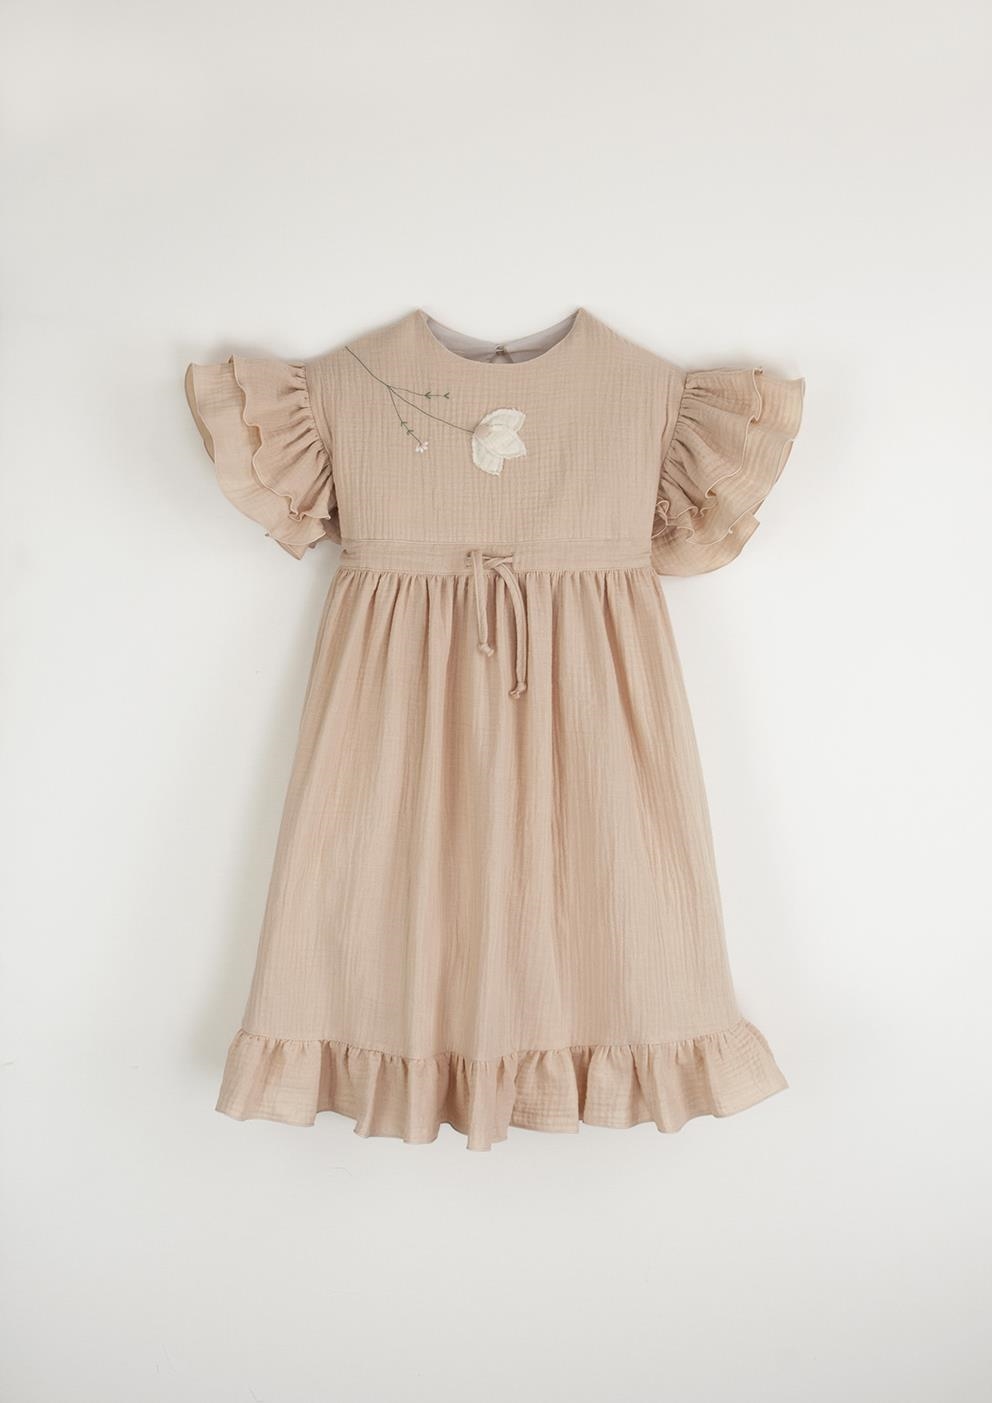 Mod.34.2 Pink organic dress with embroidered yoke and appliqué | SS23 Mod.34.2 Pink organic dress with embroidered yoke and appliqué